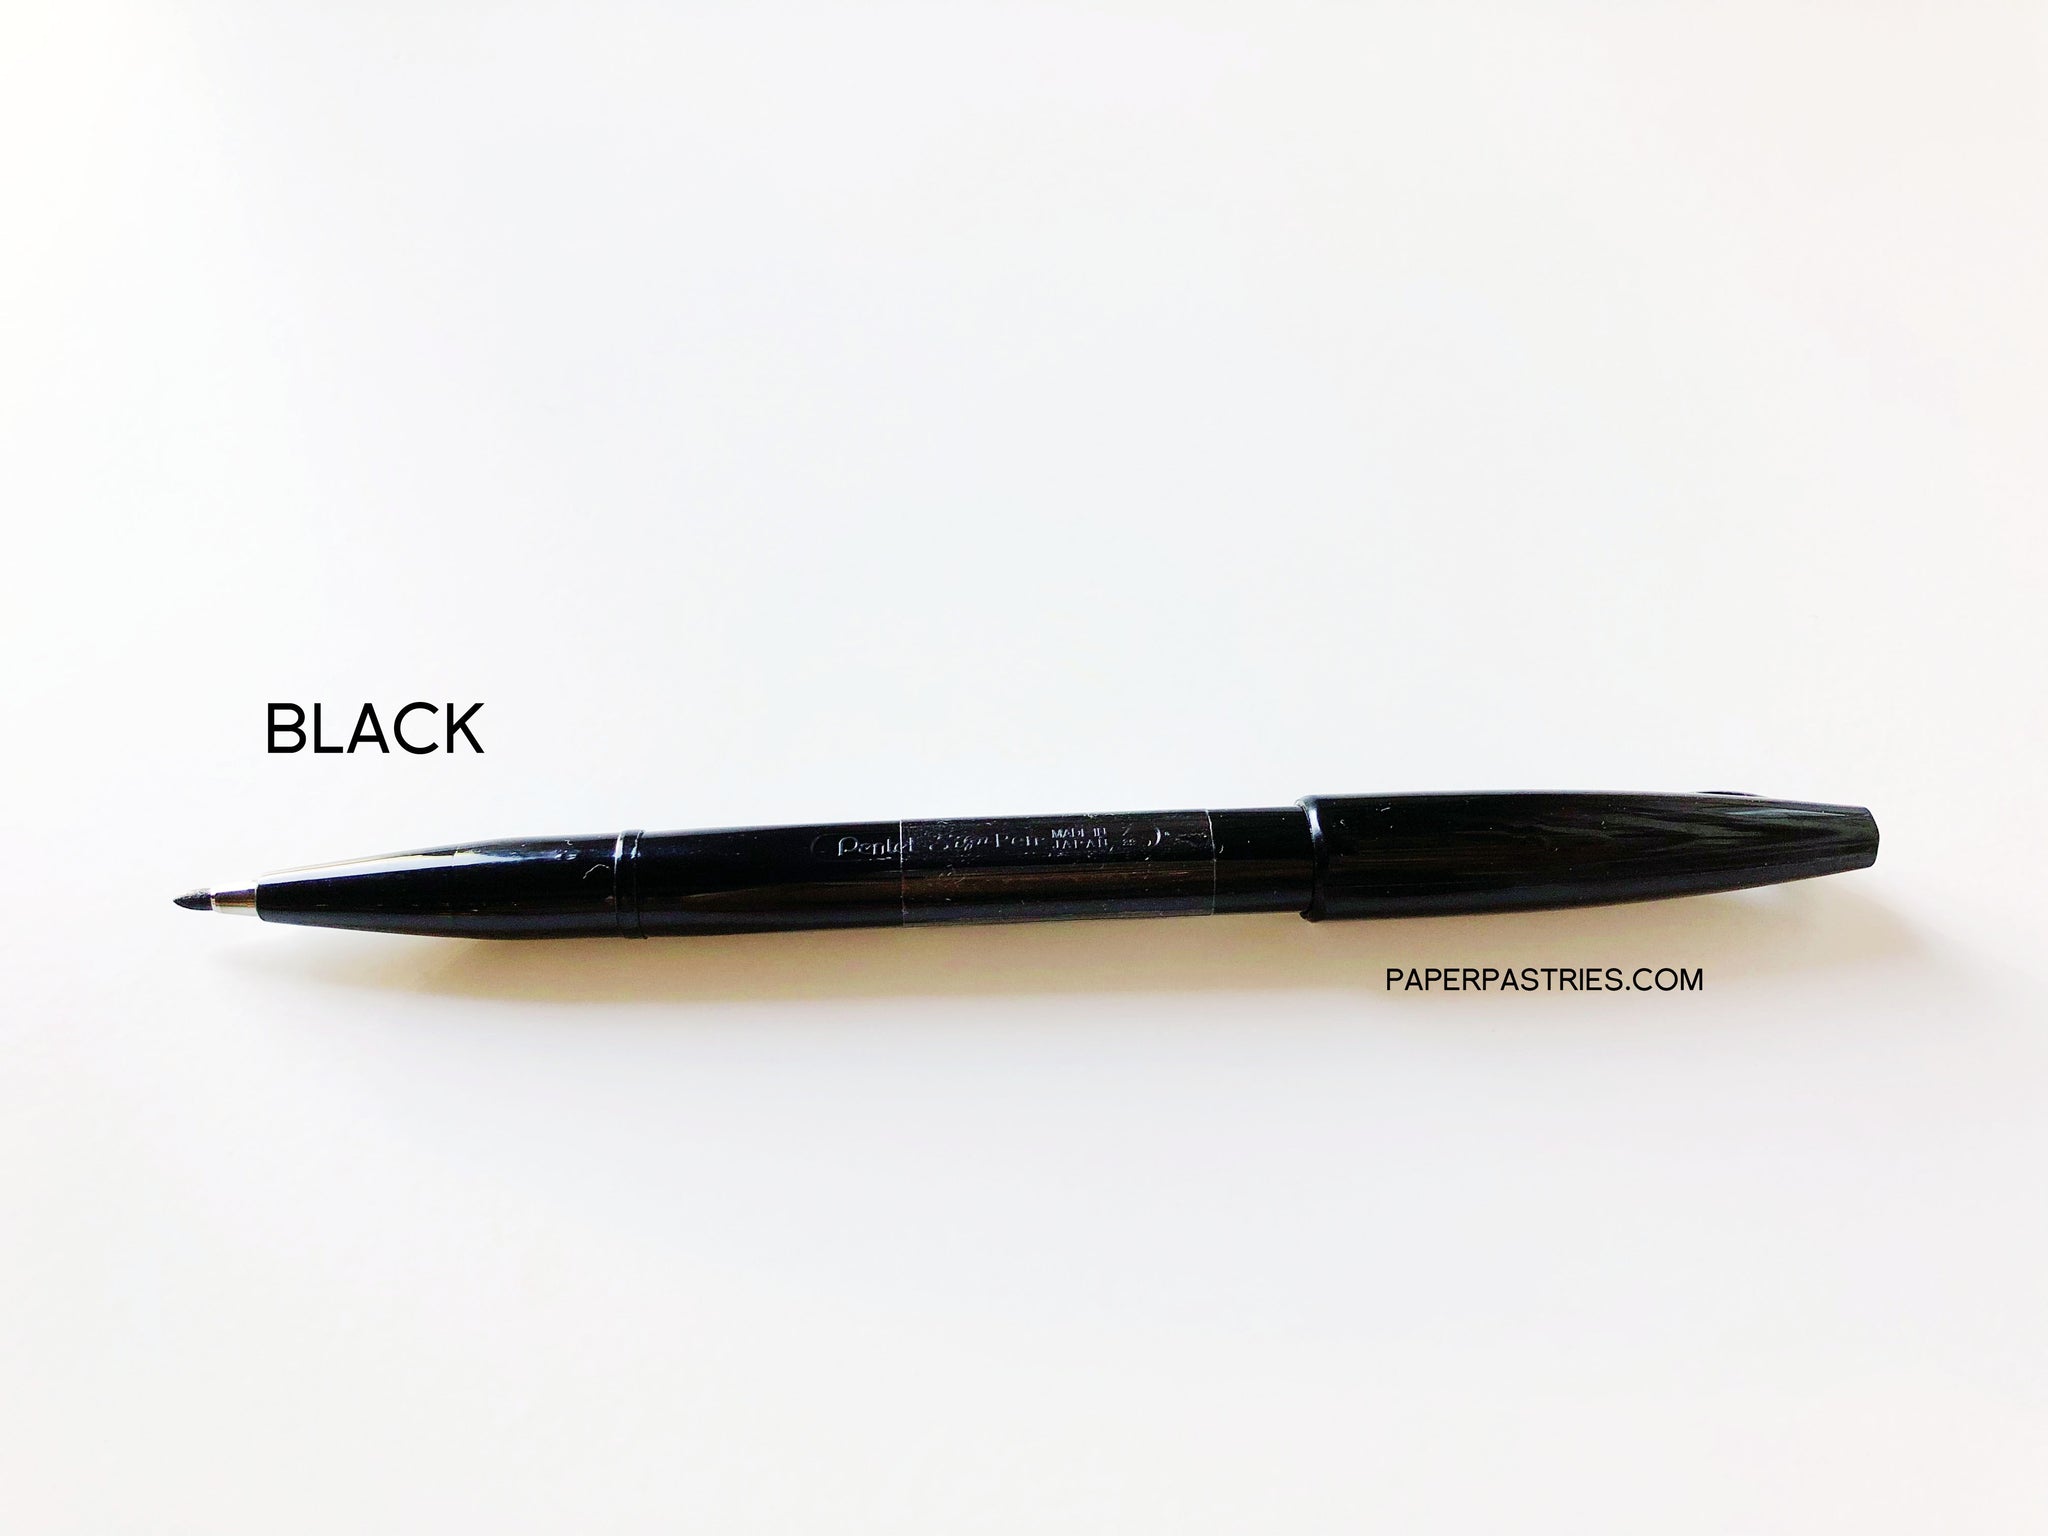 Pentel Fude Touch Brush Sign Pen - Black